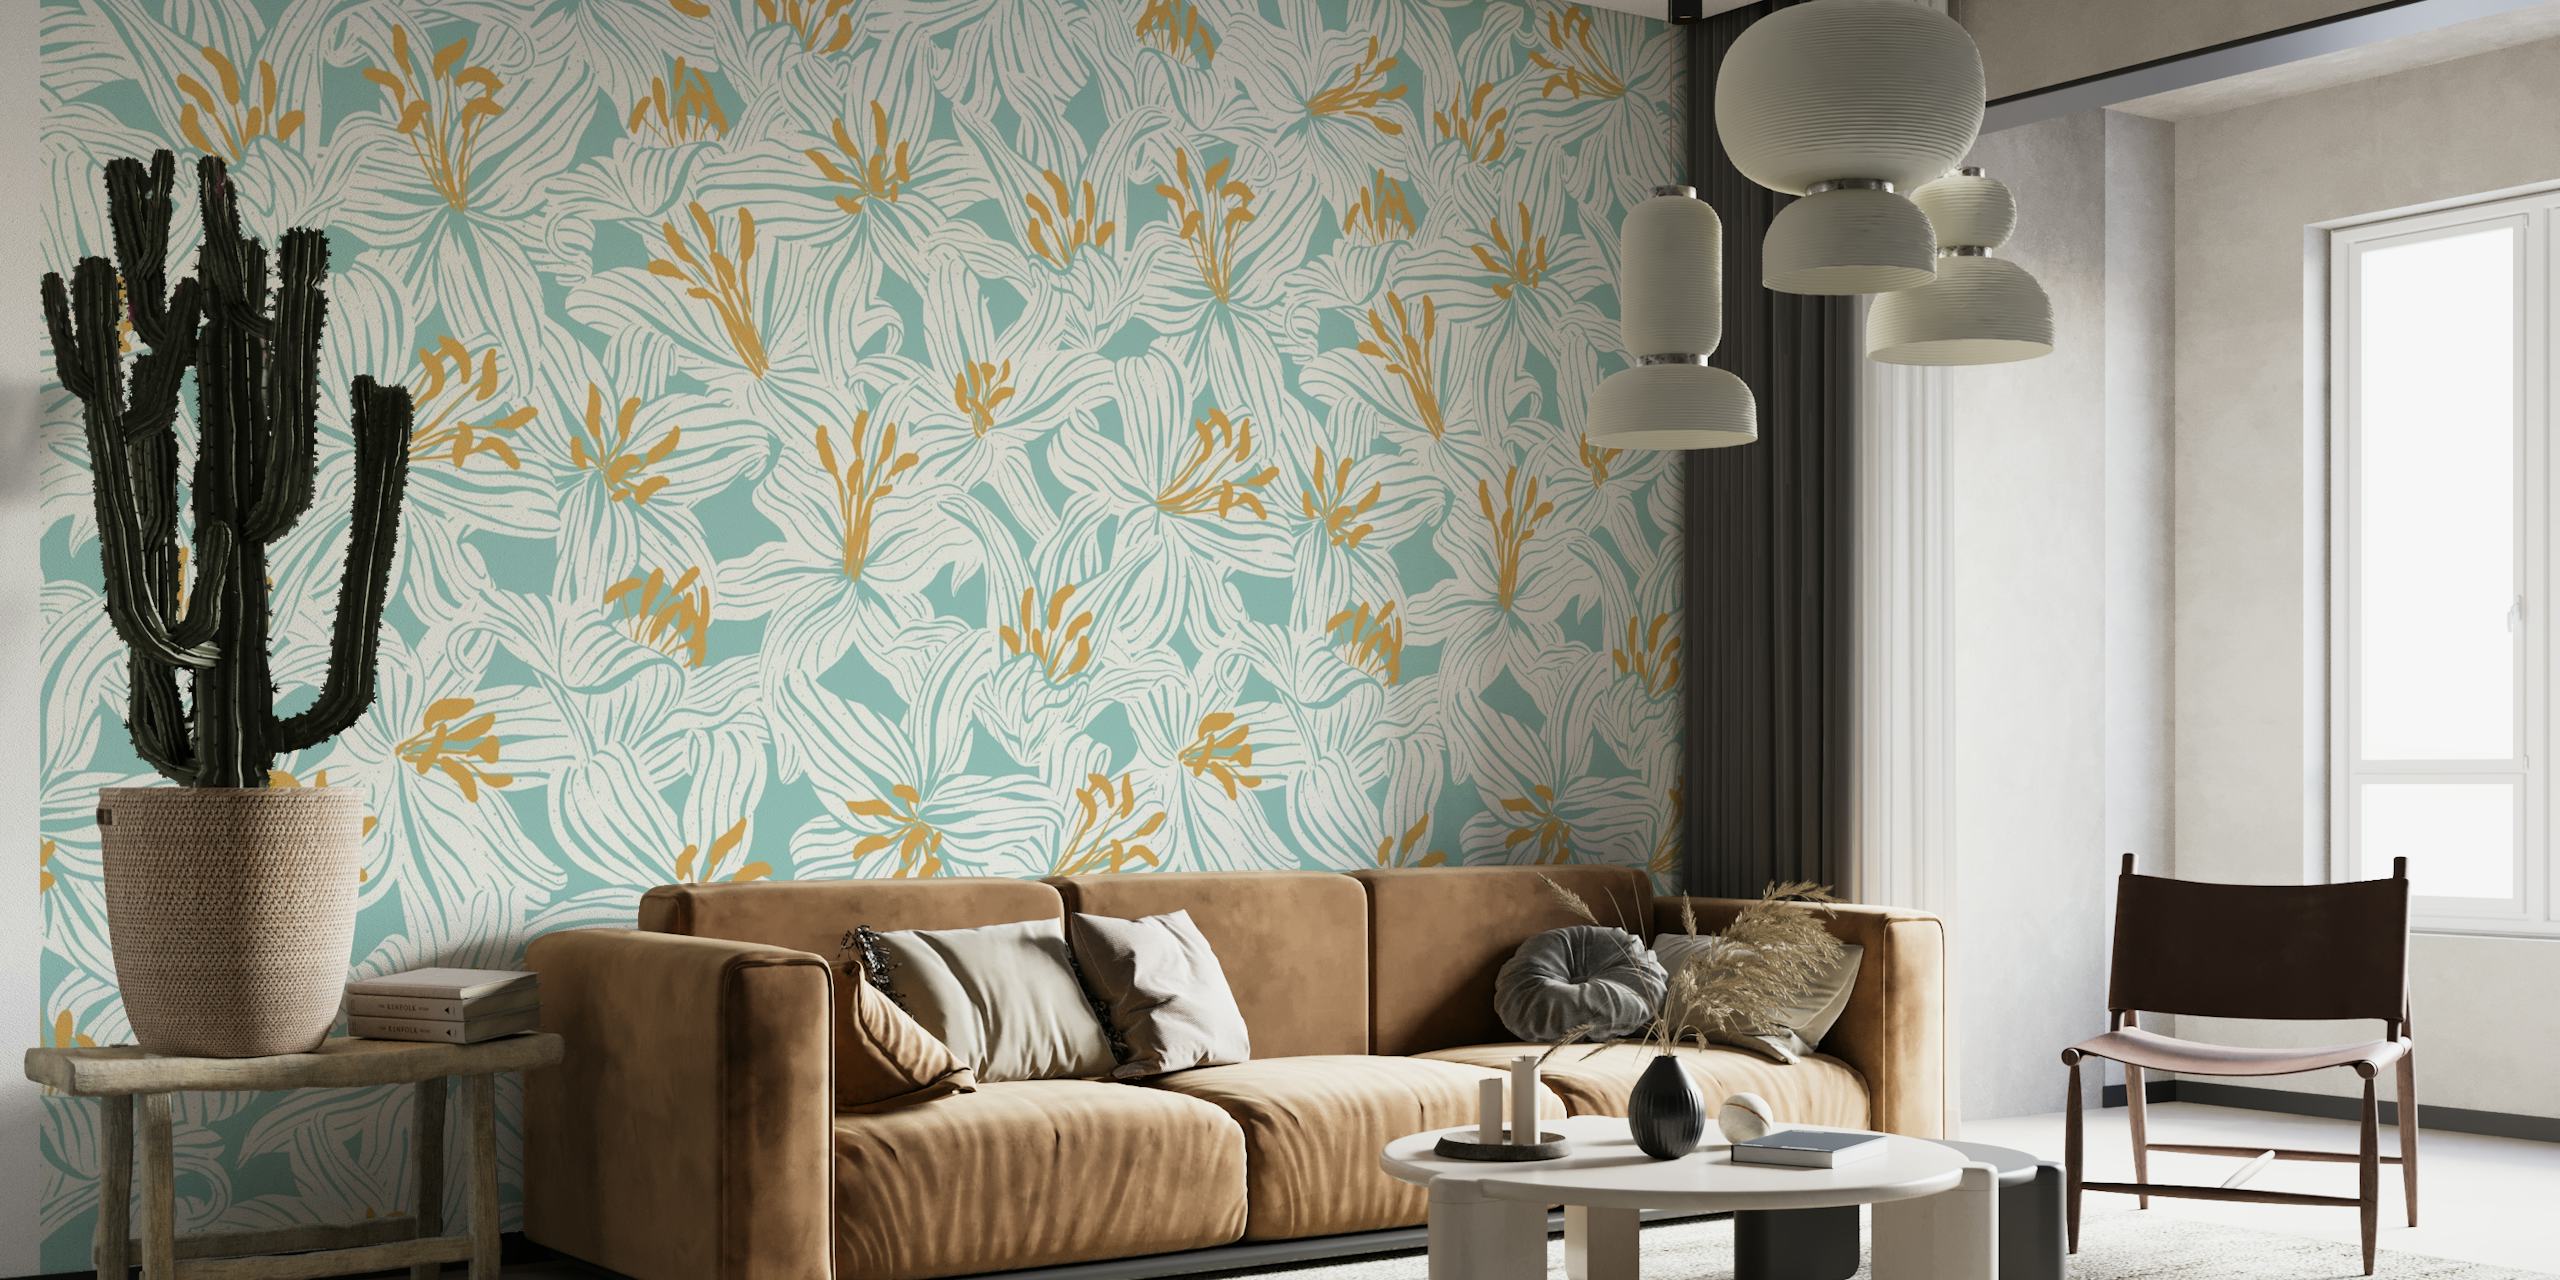 Elegantni dizajn zidnih slika s ljiljanima i lišćem